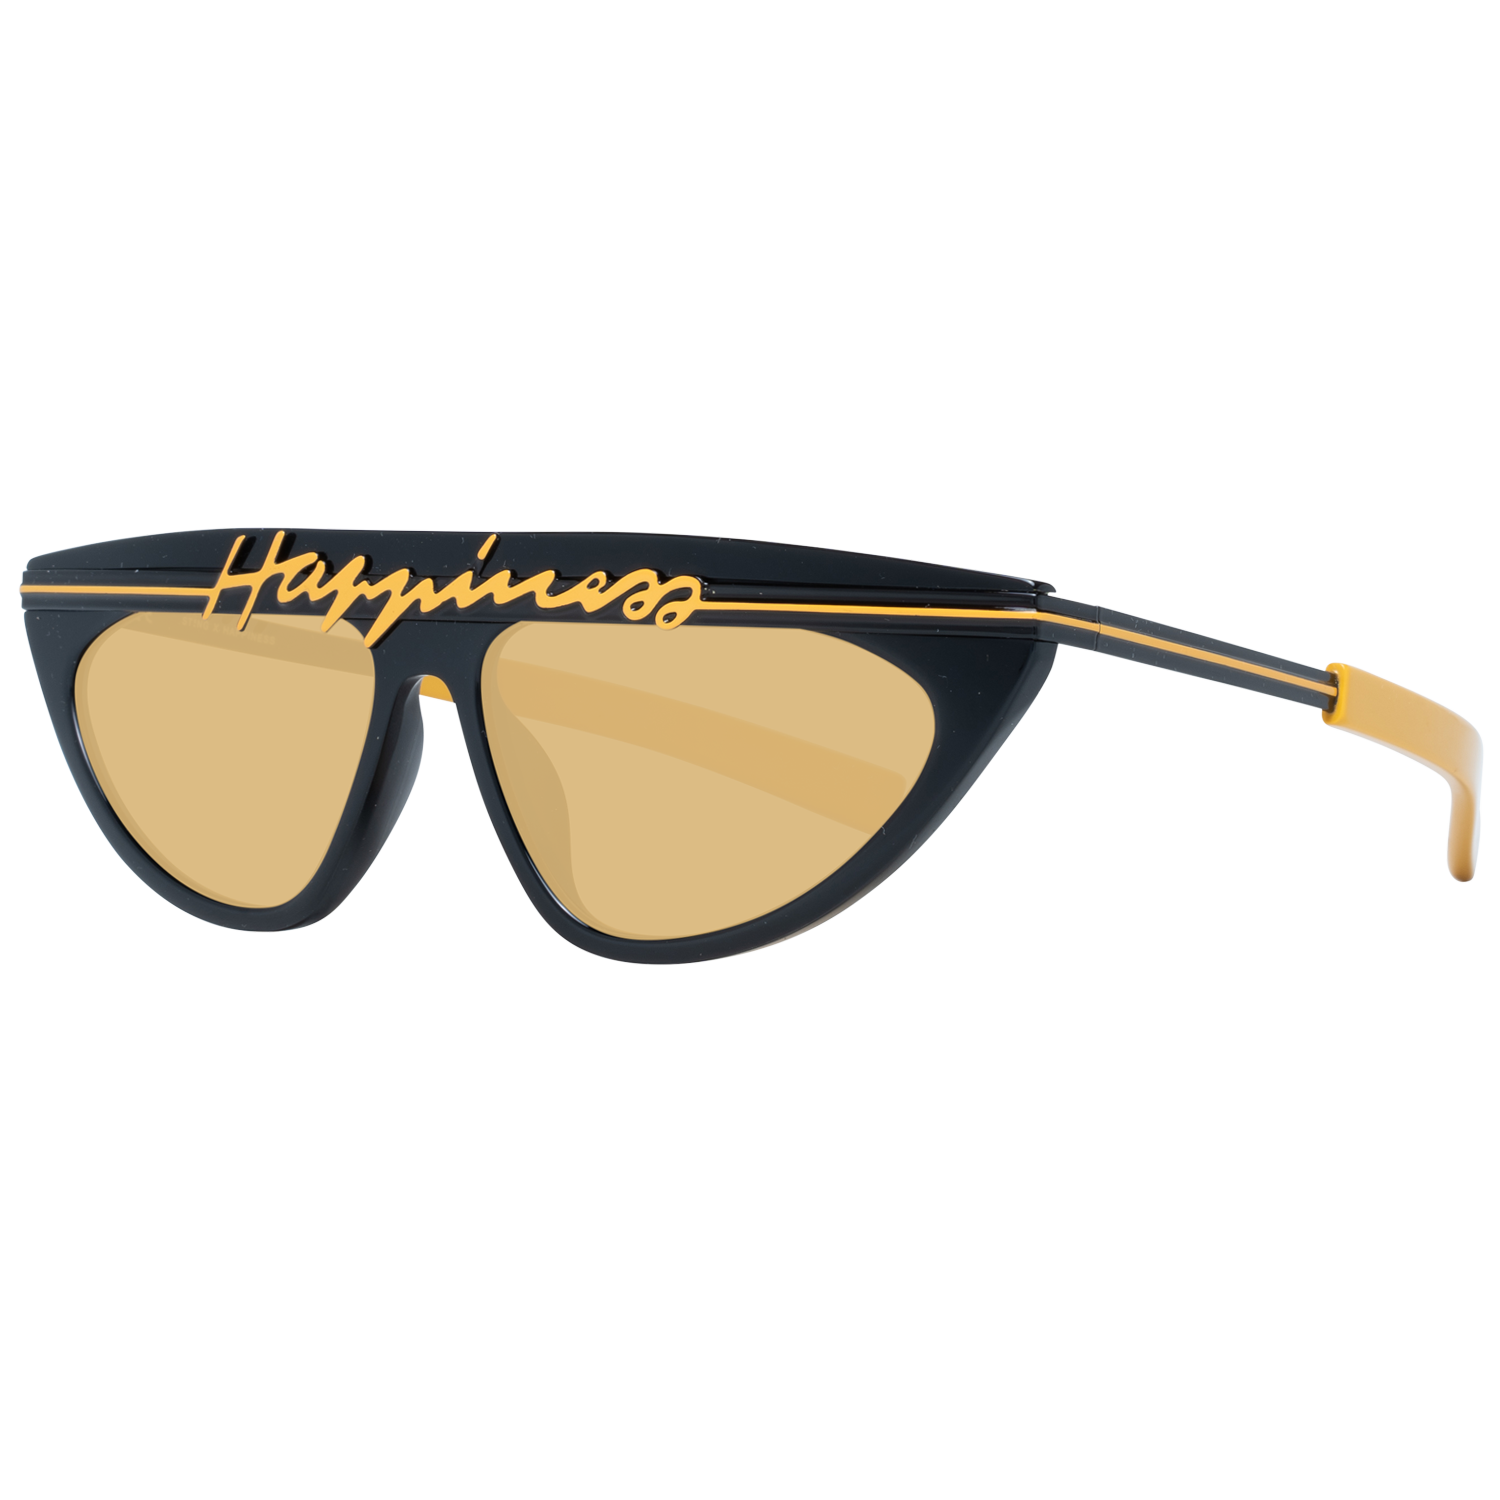 Sting Sunglasses Sting Sunglasses SST367 700Y 56 Eyeglasses Eyewear UK USA Australia 